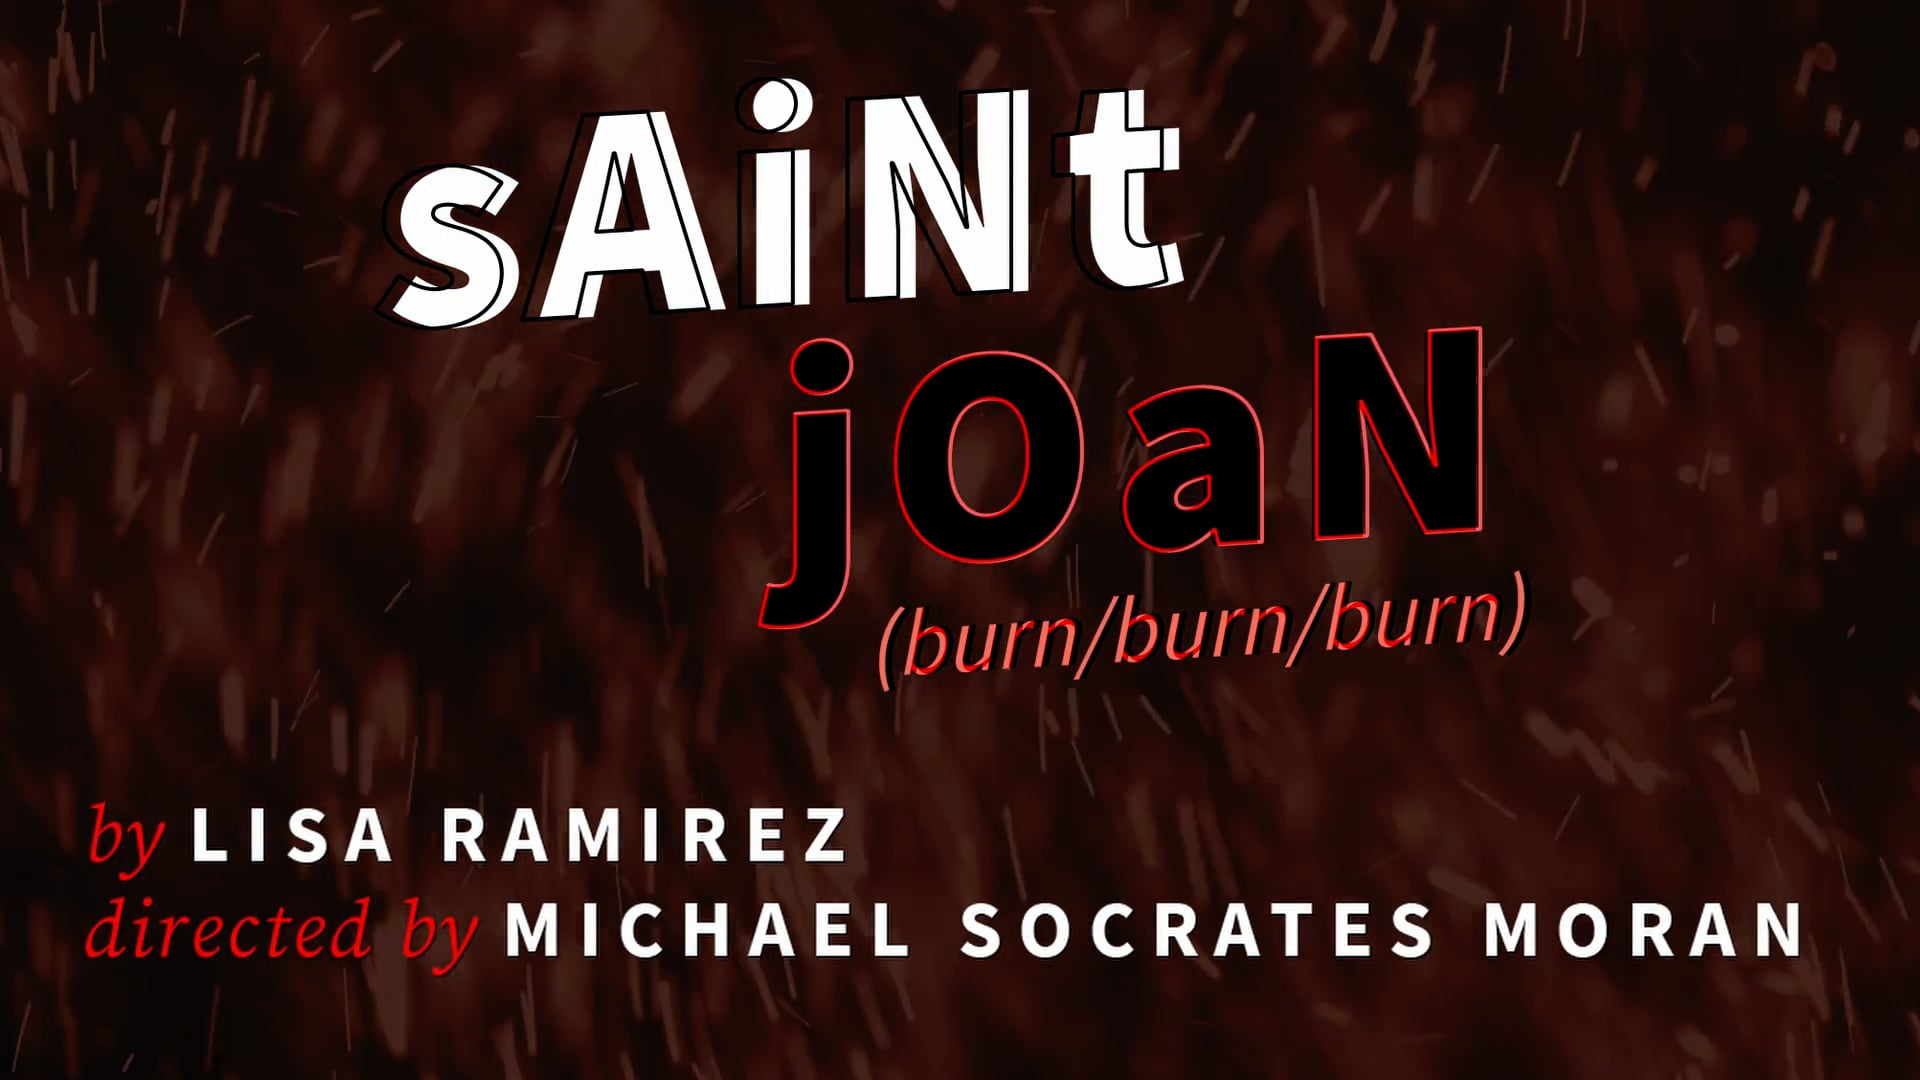 Saint Joan (burn/burn/burn) by Lisa Ramirez, OTP